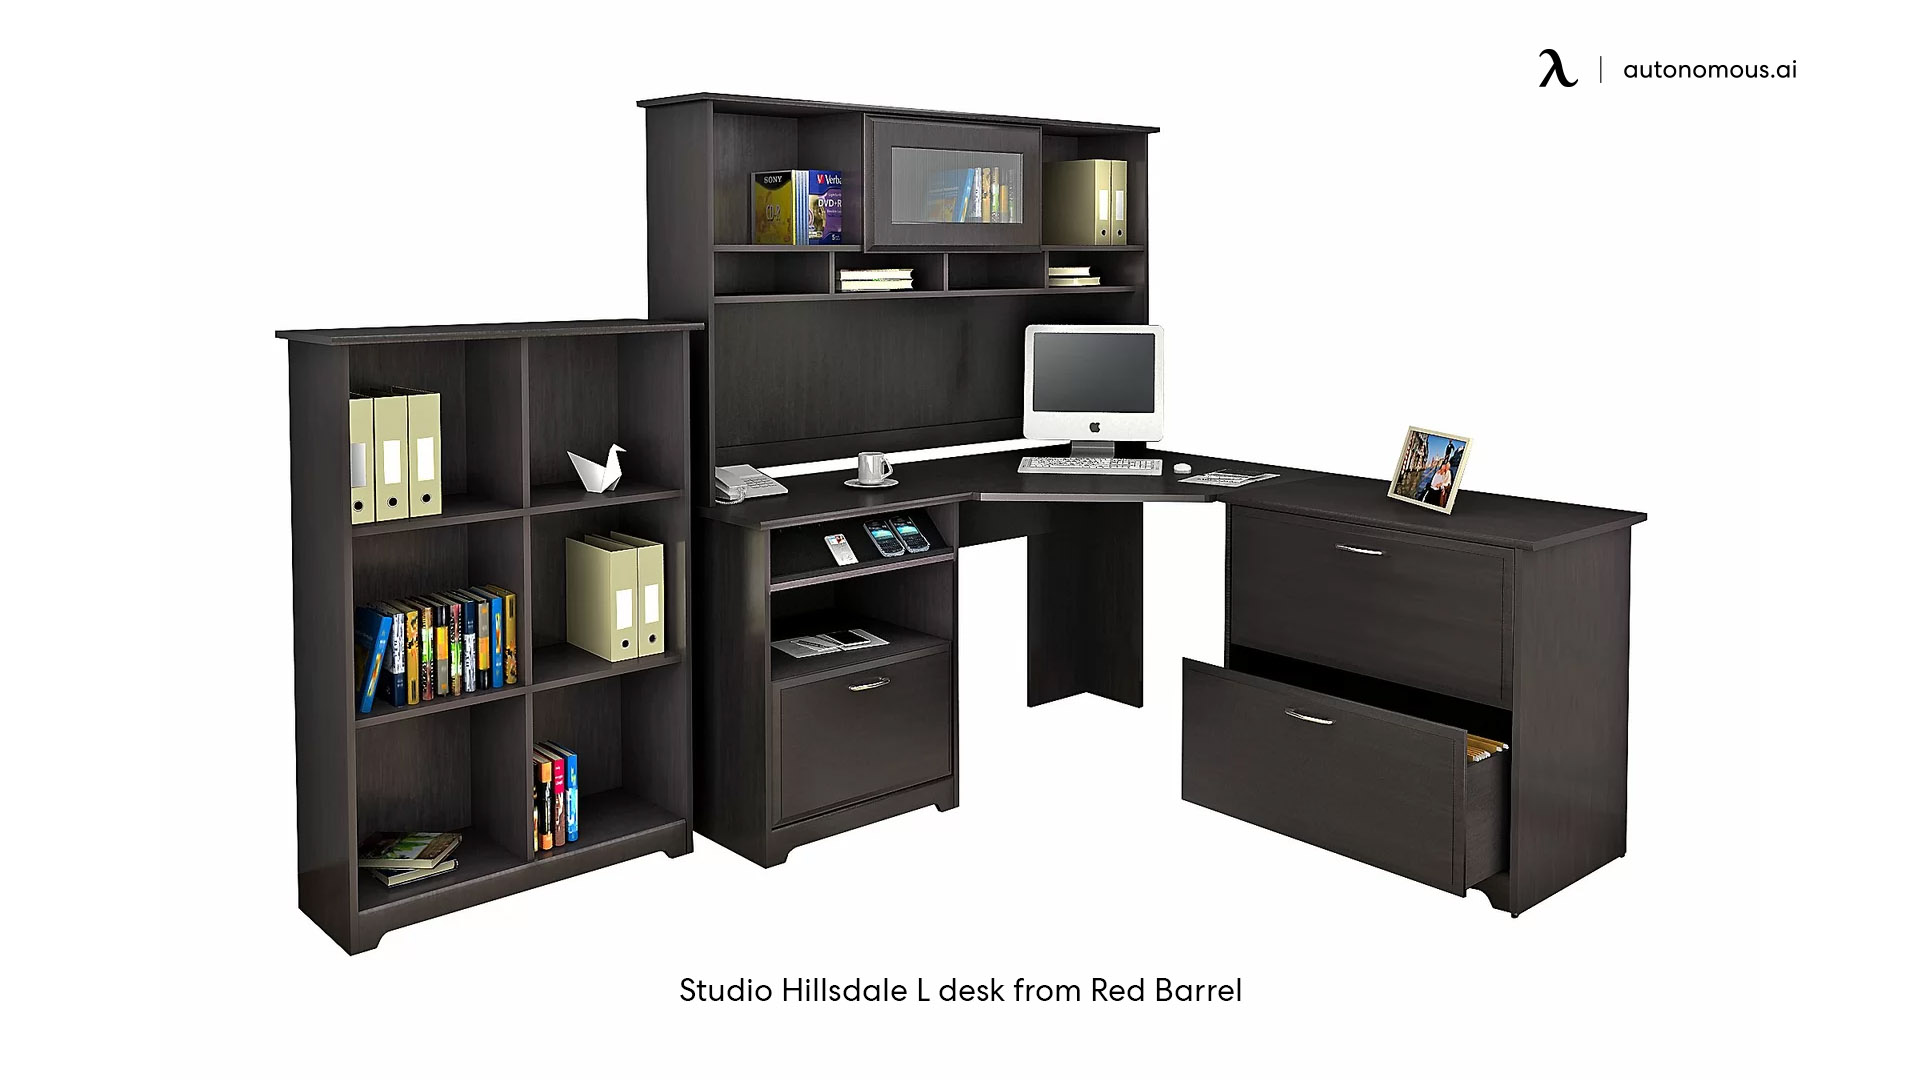 Studio Hillsdale L desk from Red Barrel